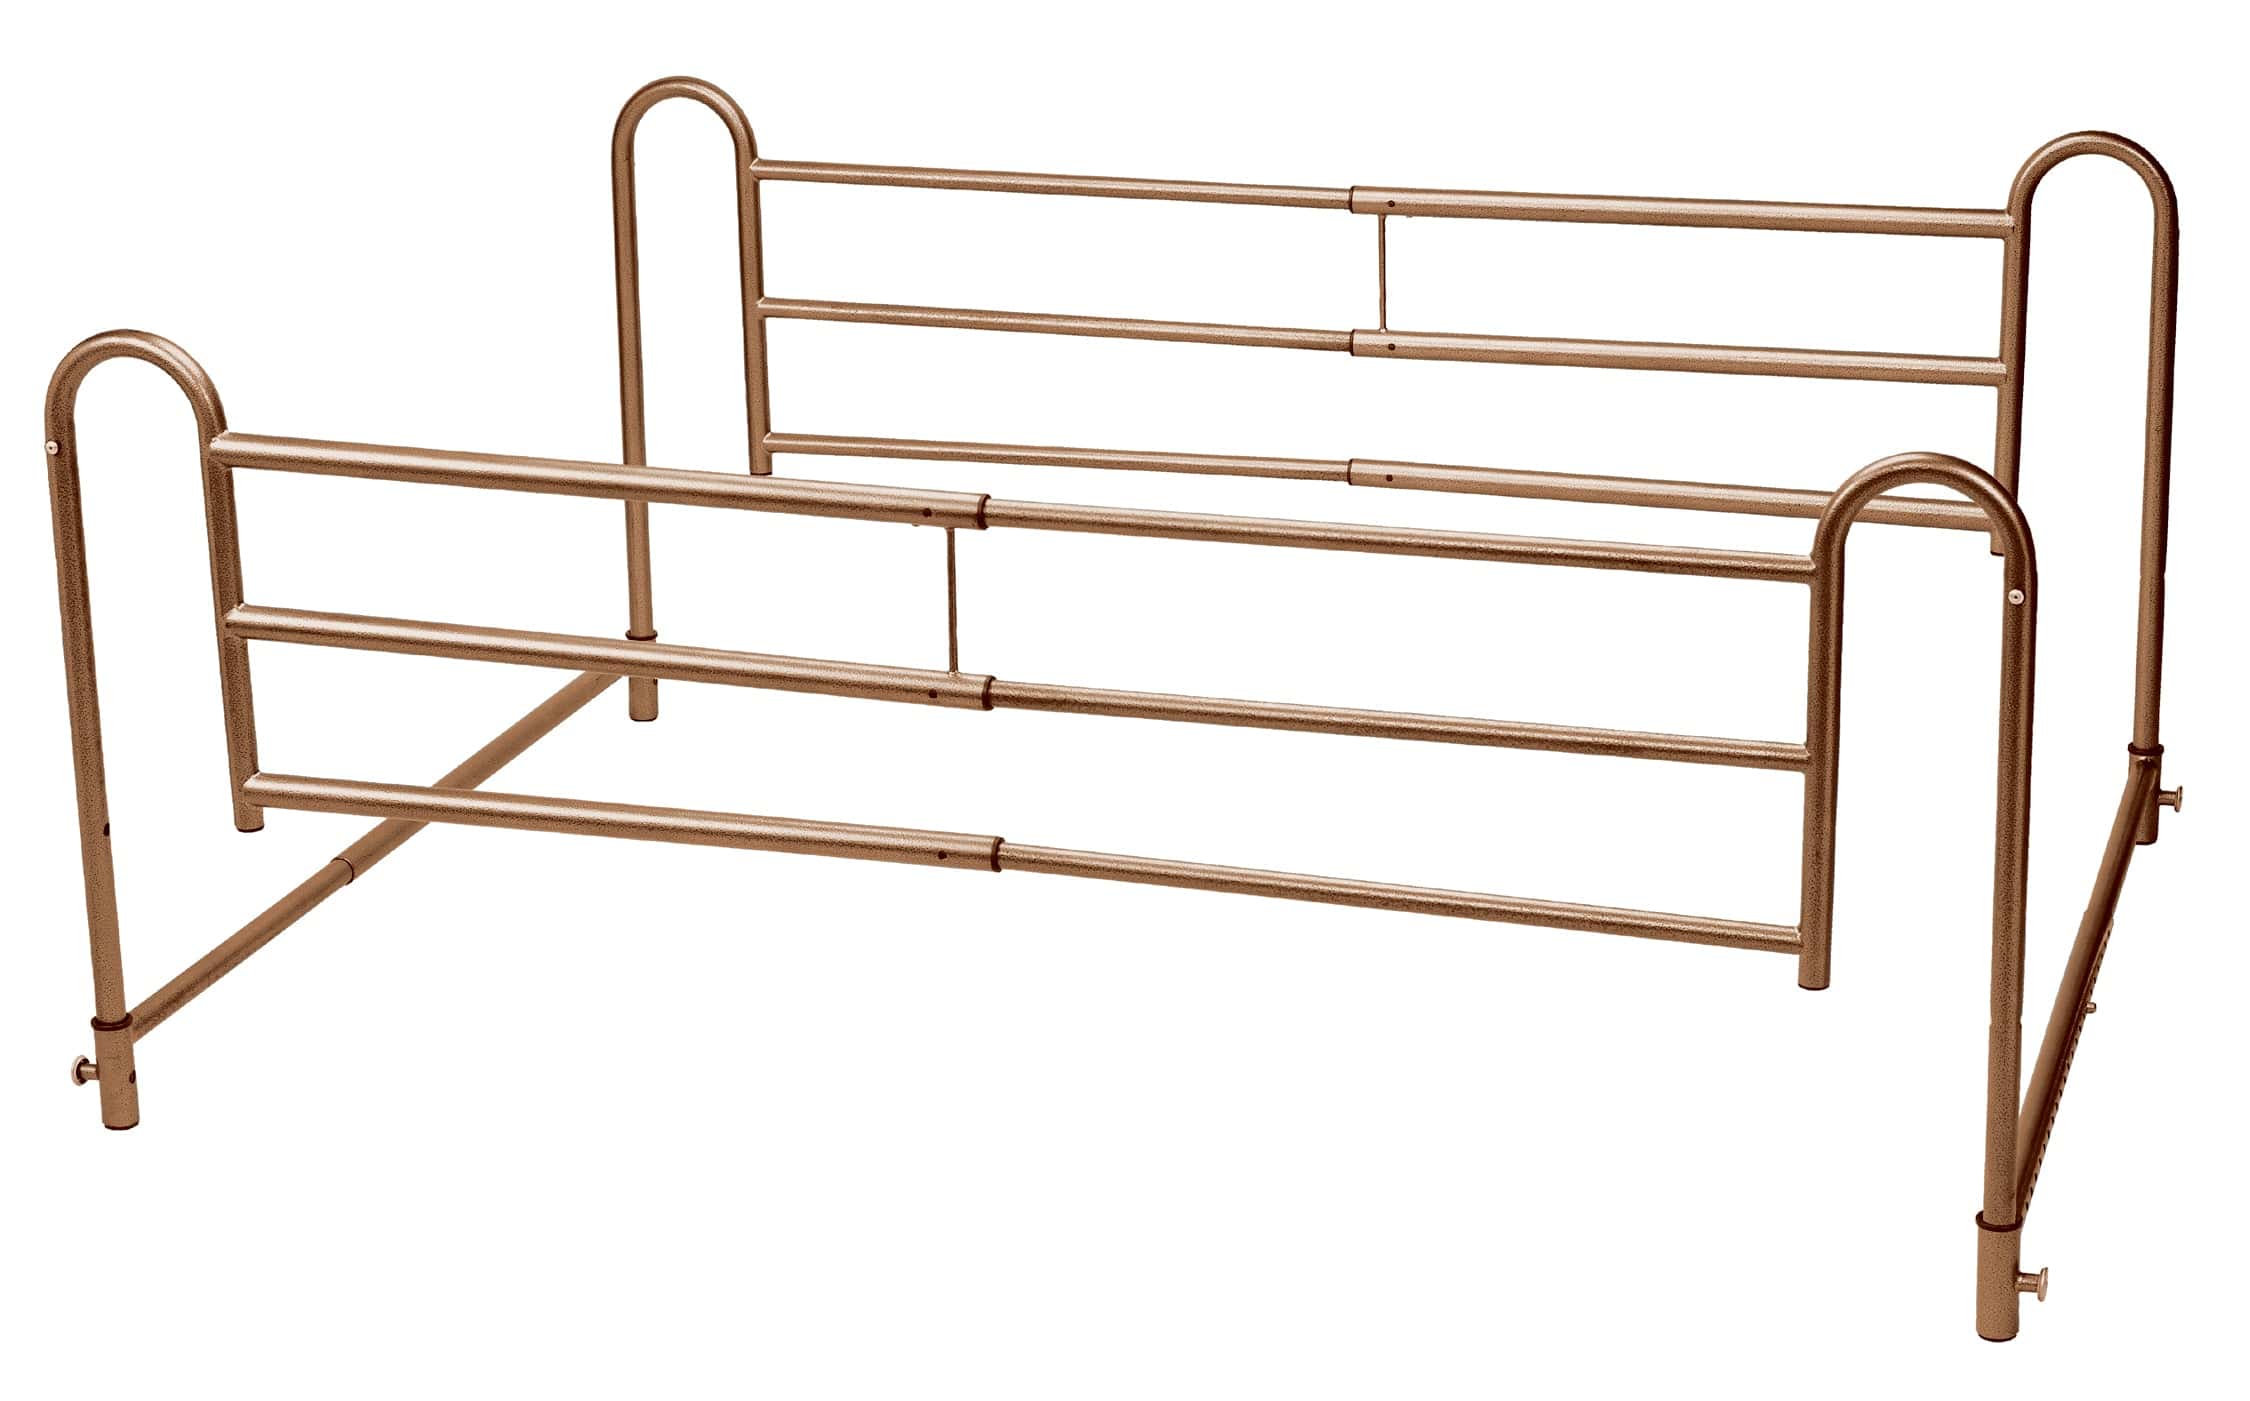 Drive Medical Drive Medical Home Bed Style Adjustable Length Bed Rails 16500bv